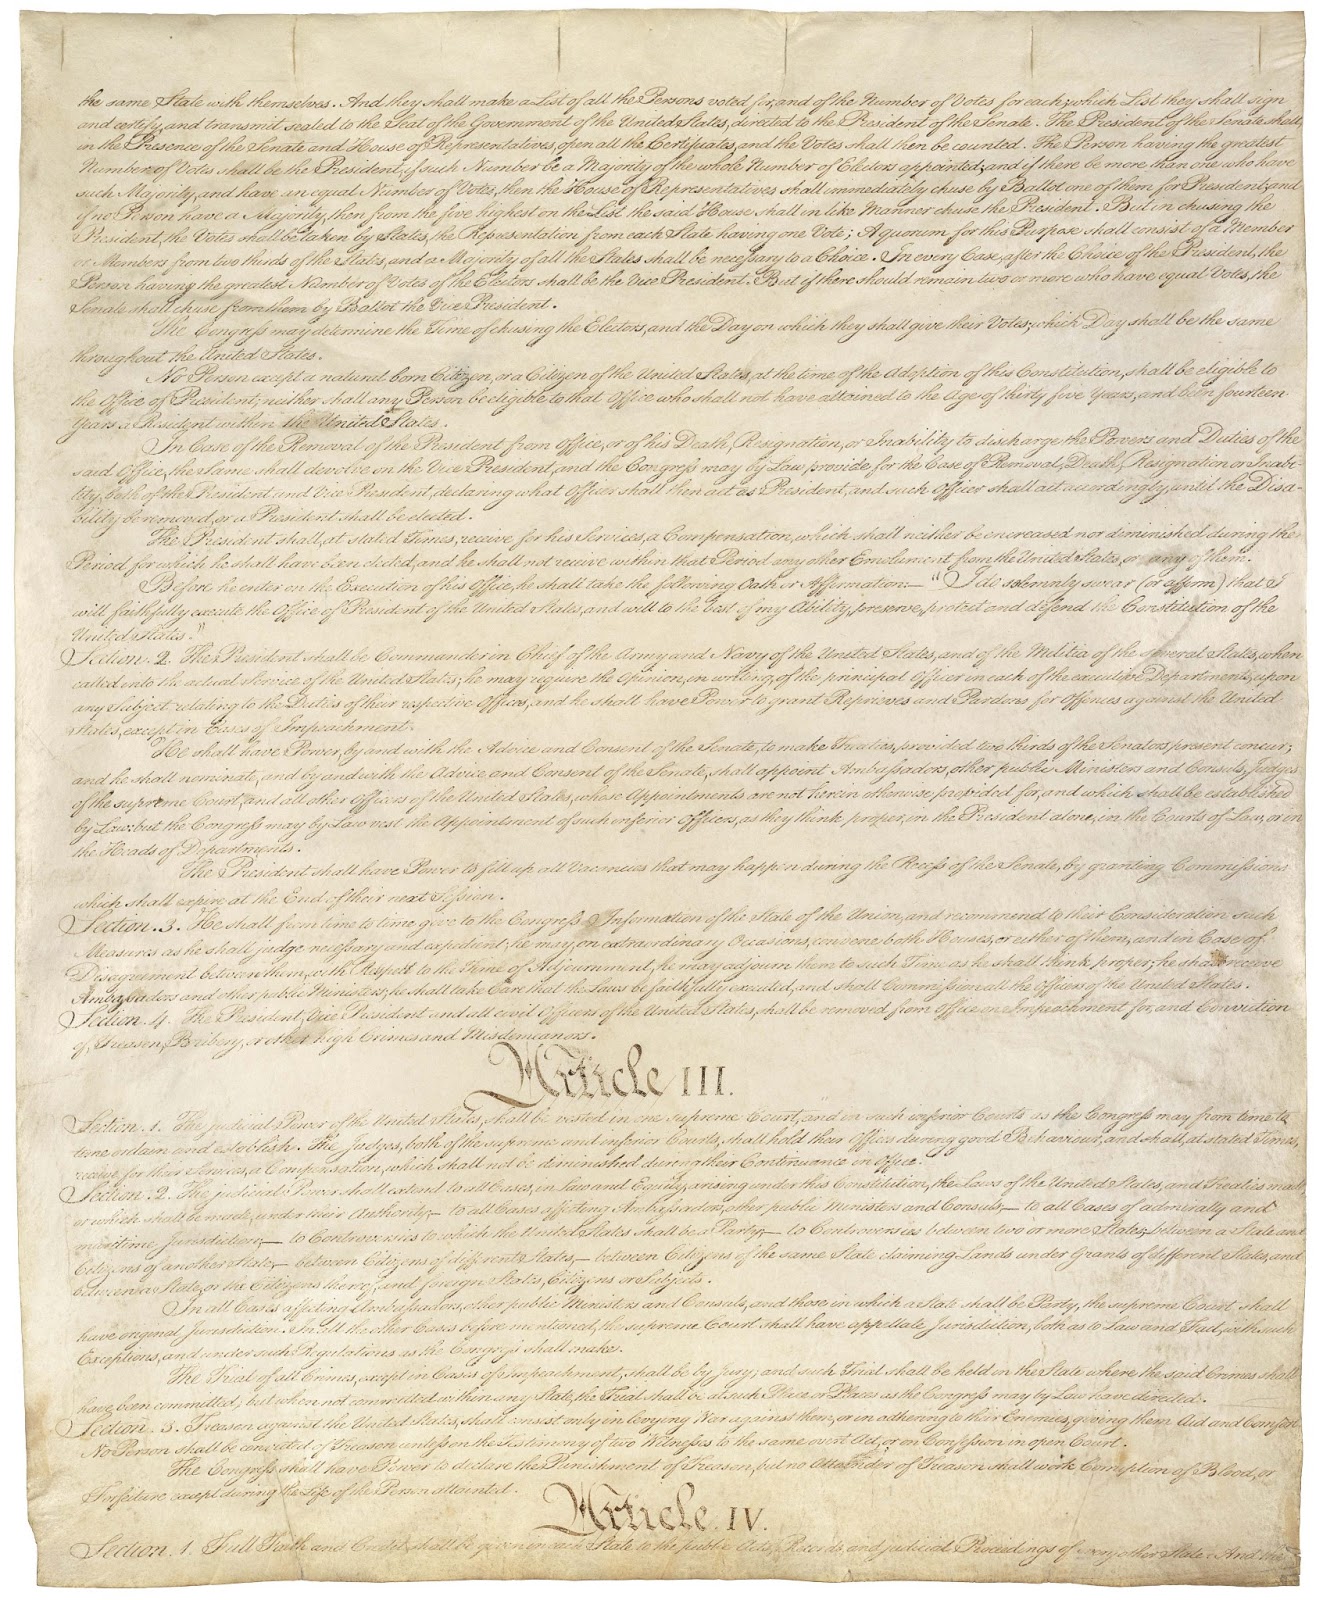 Essay urging ratification the constitution